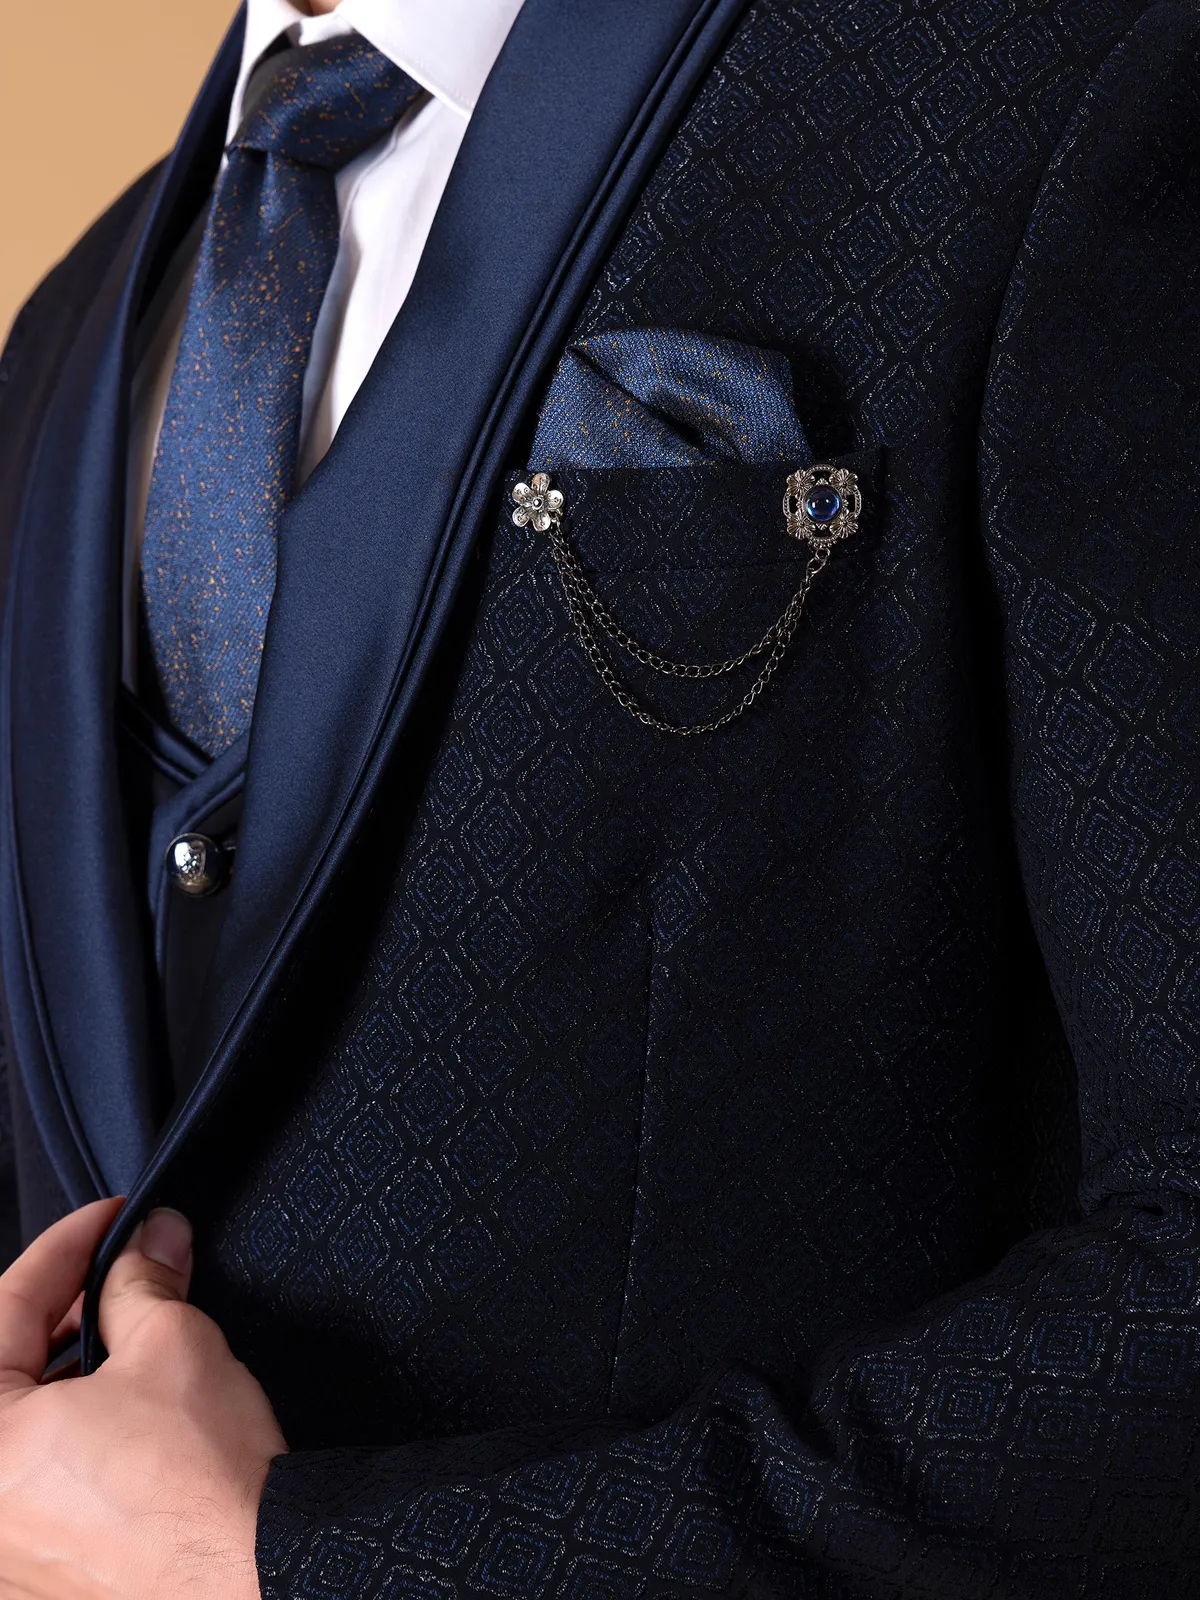 Stunning terry rayon navy coat suit